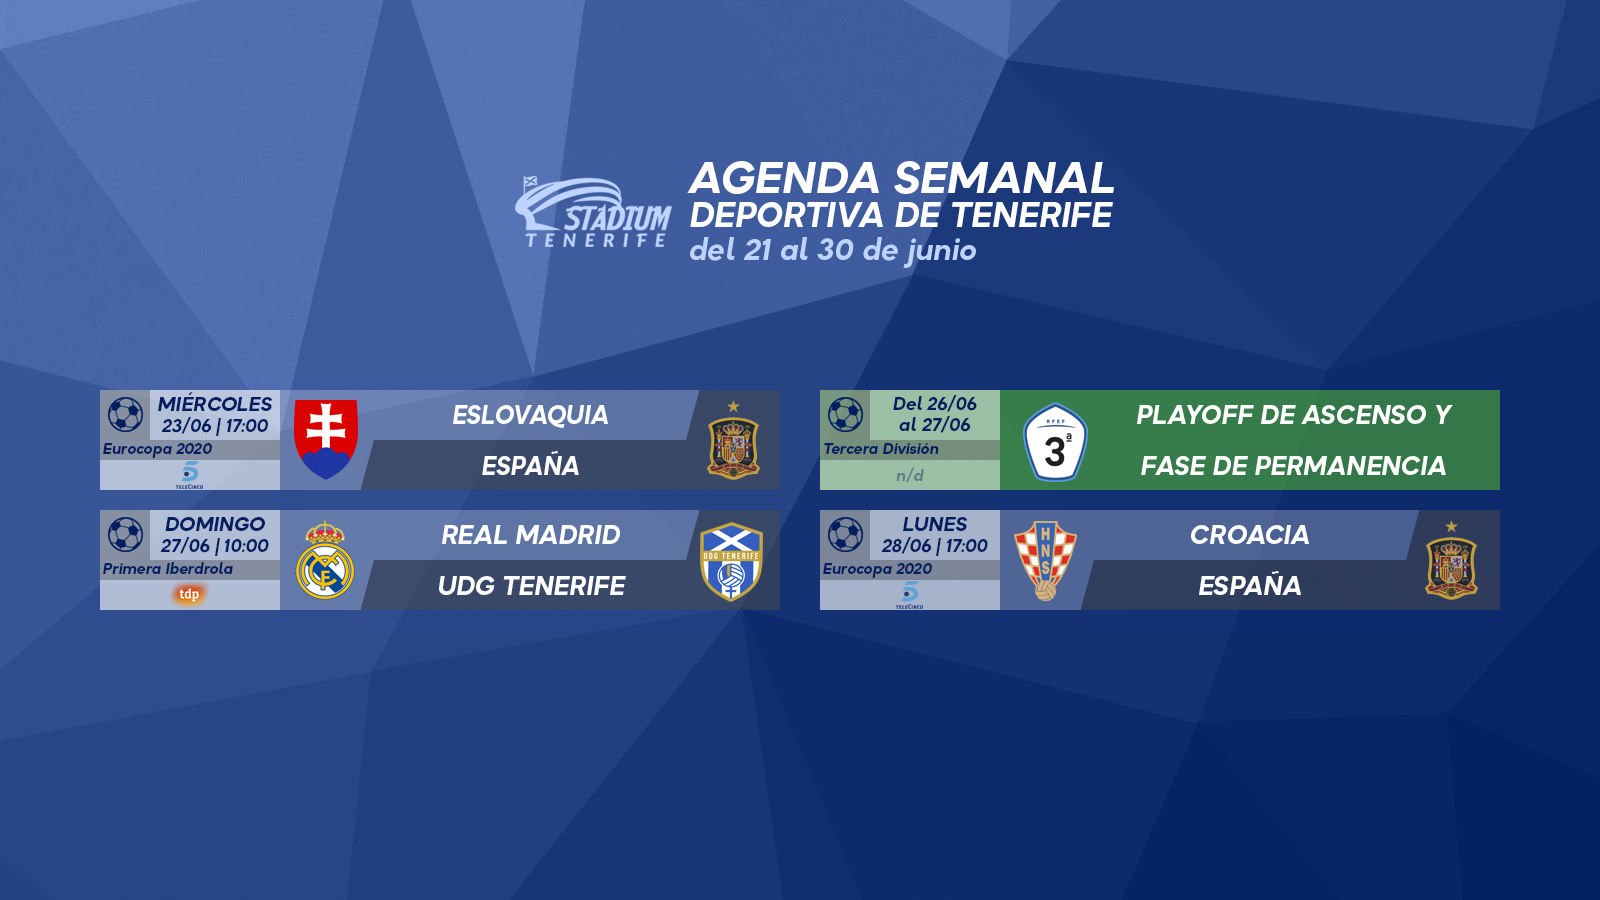 Agenda Semanal Deportiva de Tenerife (21 al 30 de junio)